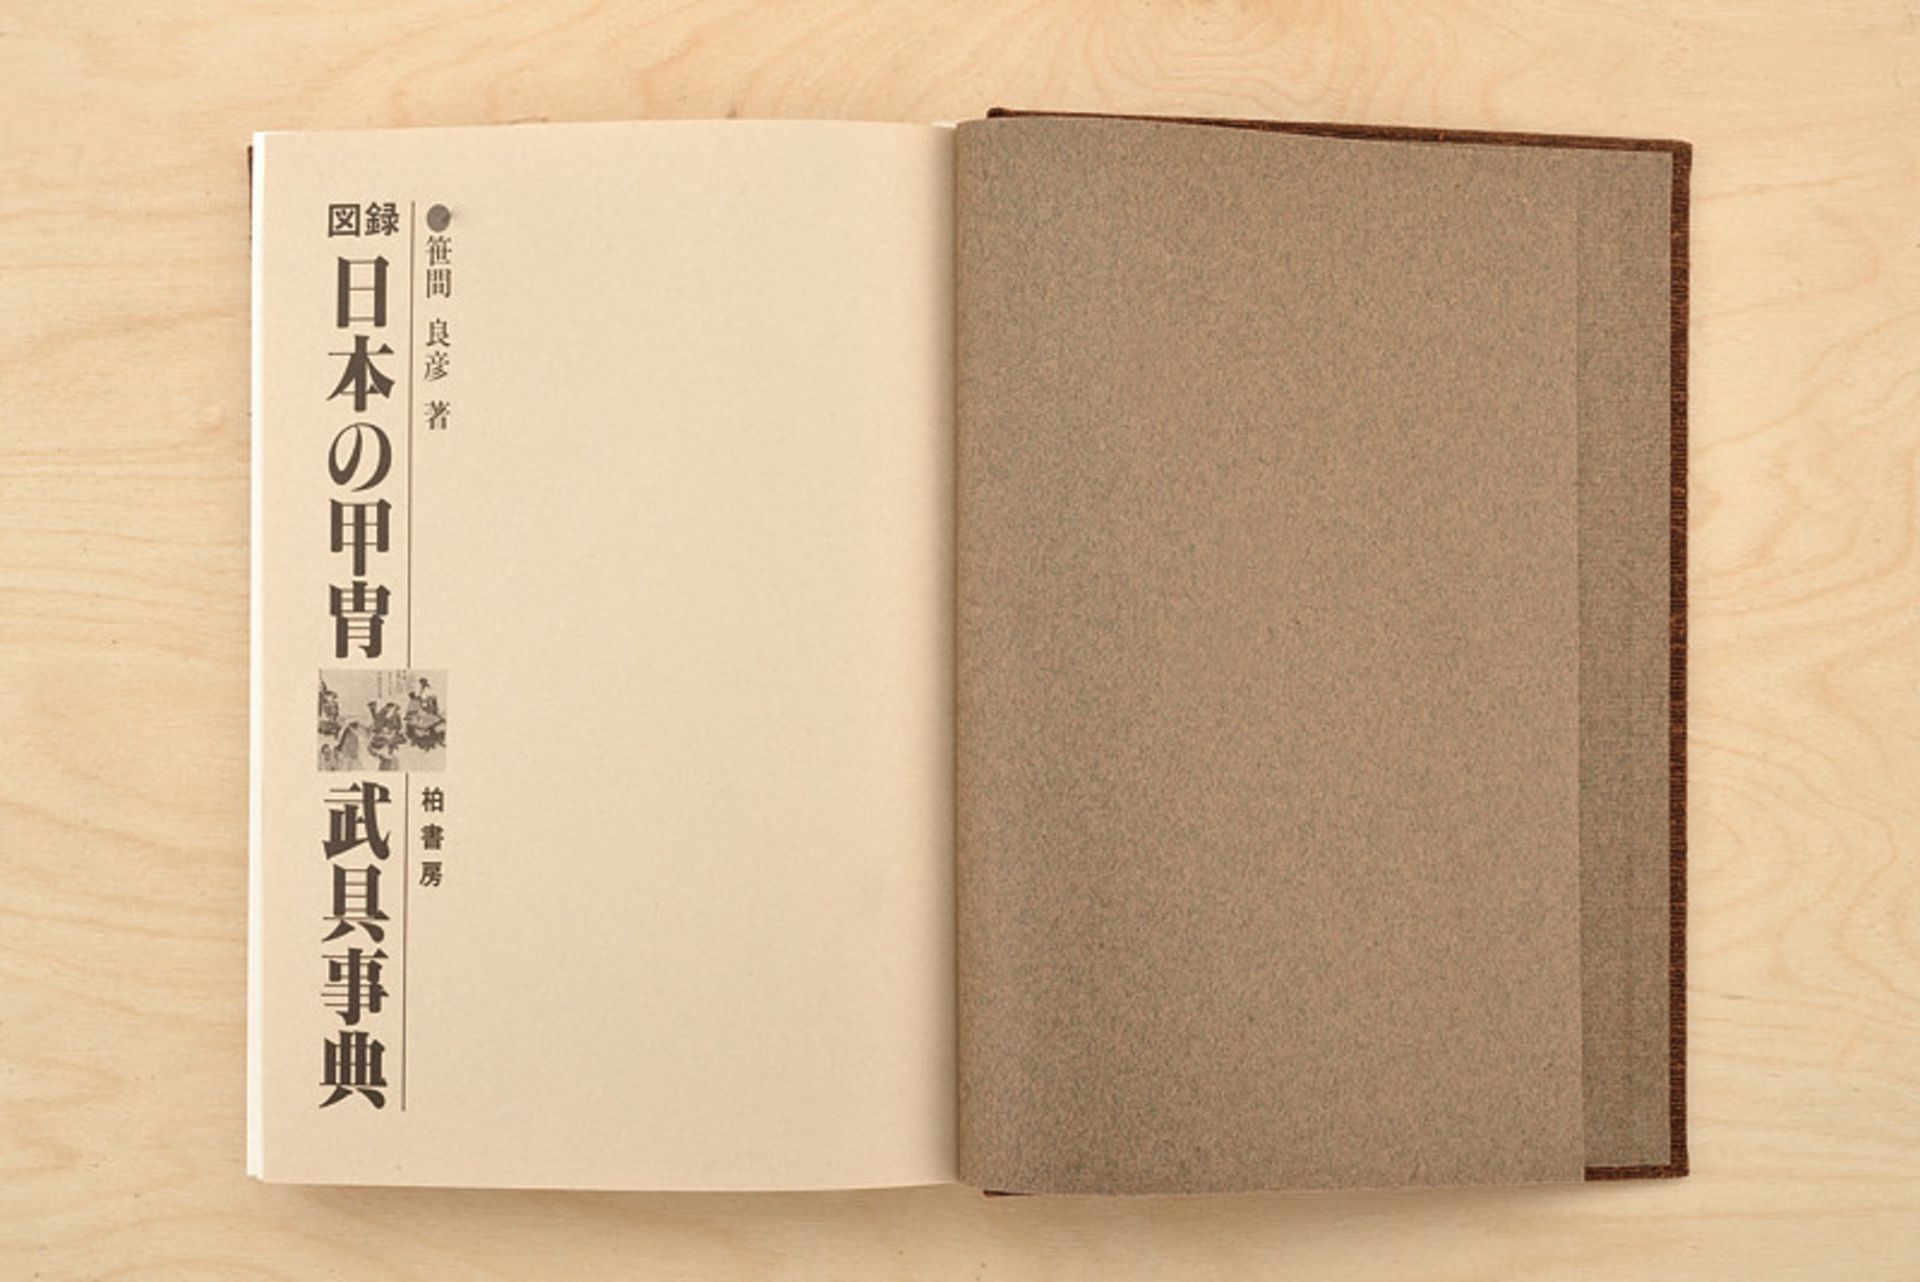 Sasama, Yoshihiko dating: 20th Century provenance: Japan "Nihon no Katchu Bugu Jiten" (Dictionary of - Image 3 of 4